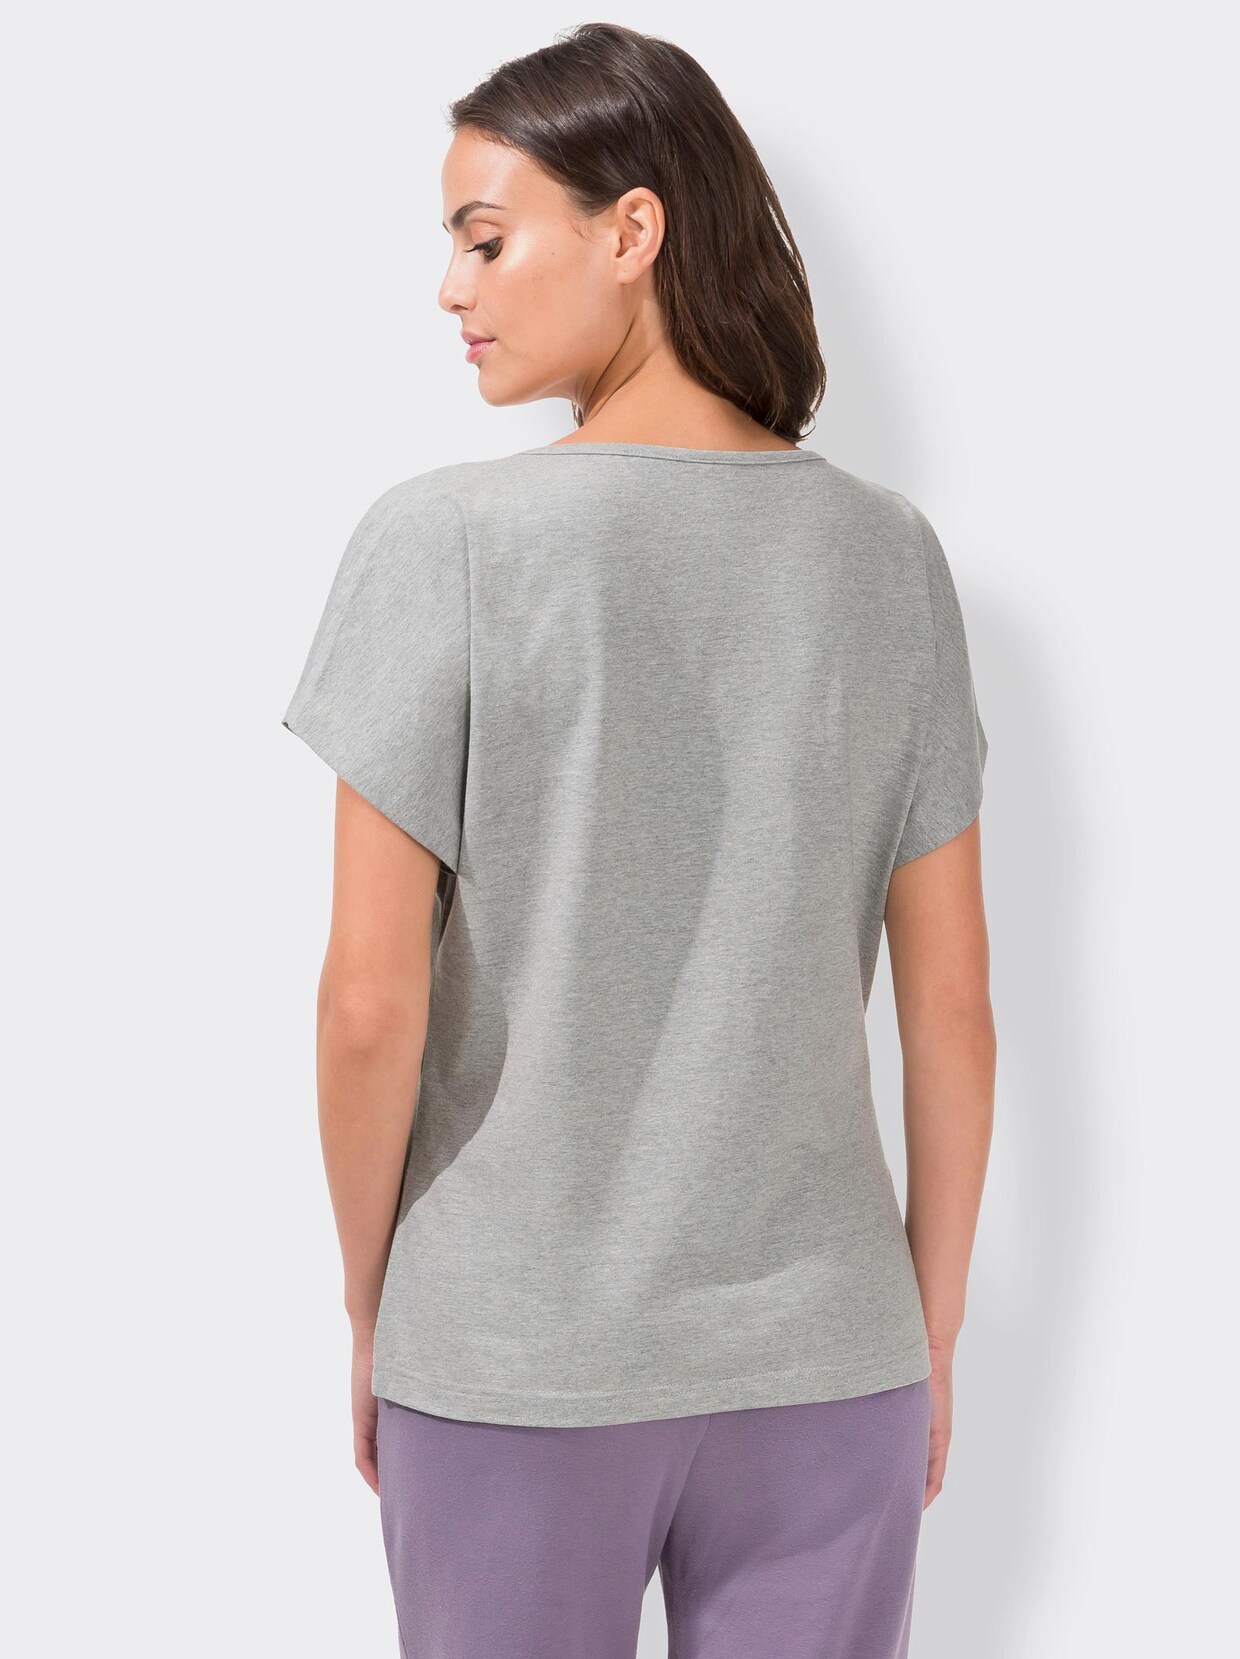 feel good Shirts - grau + grau-gepunktet